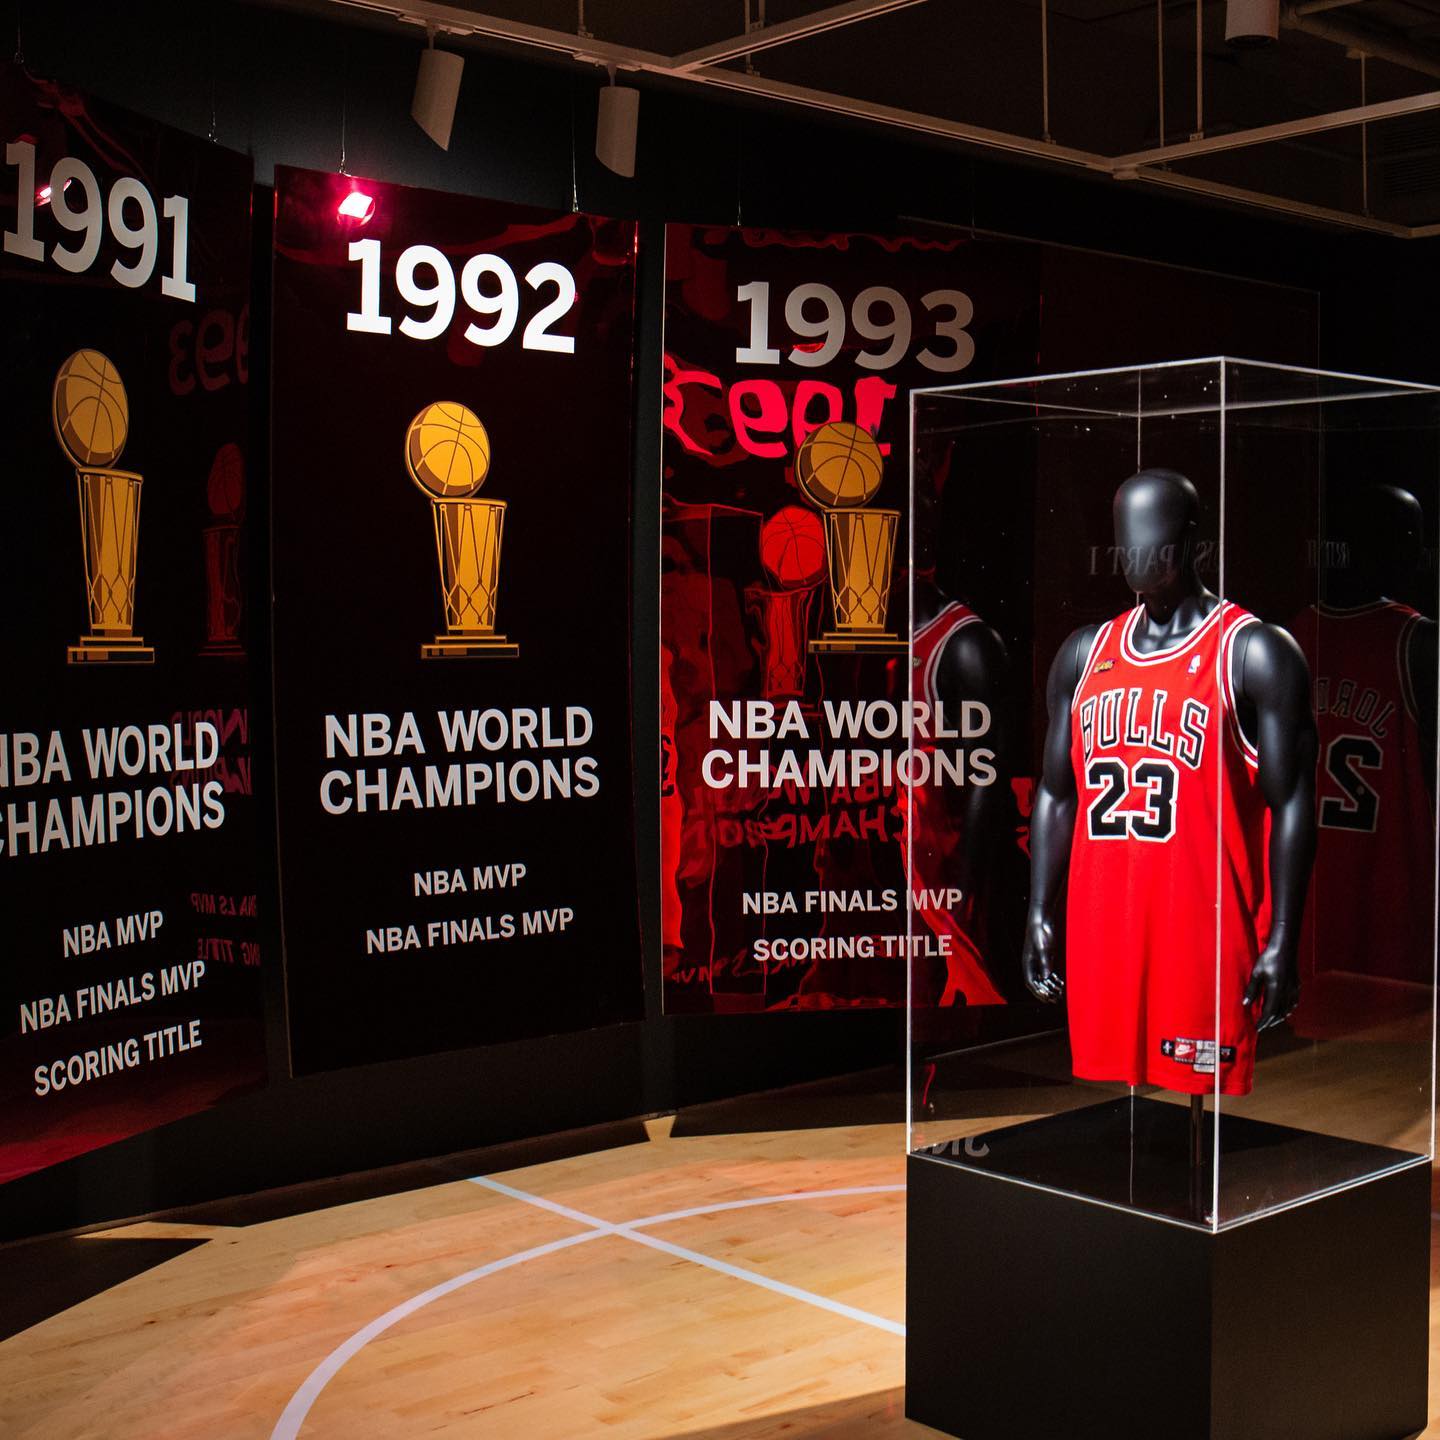 Michael Jordan 1998 “Last Dance” Finals Jersey Sells for $10.1 Million